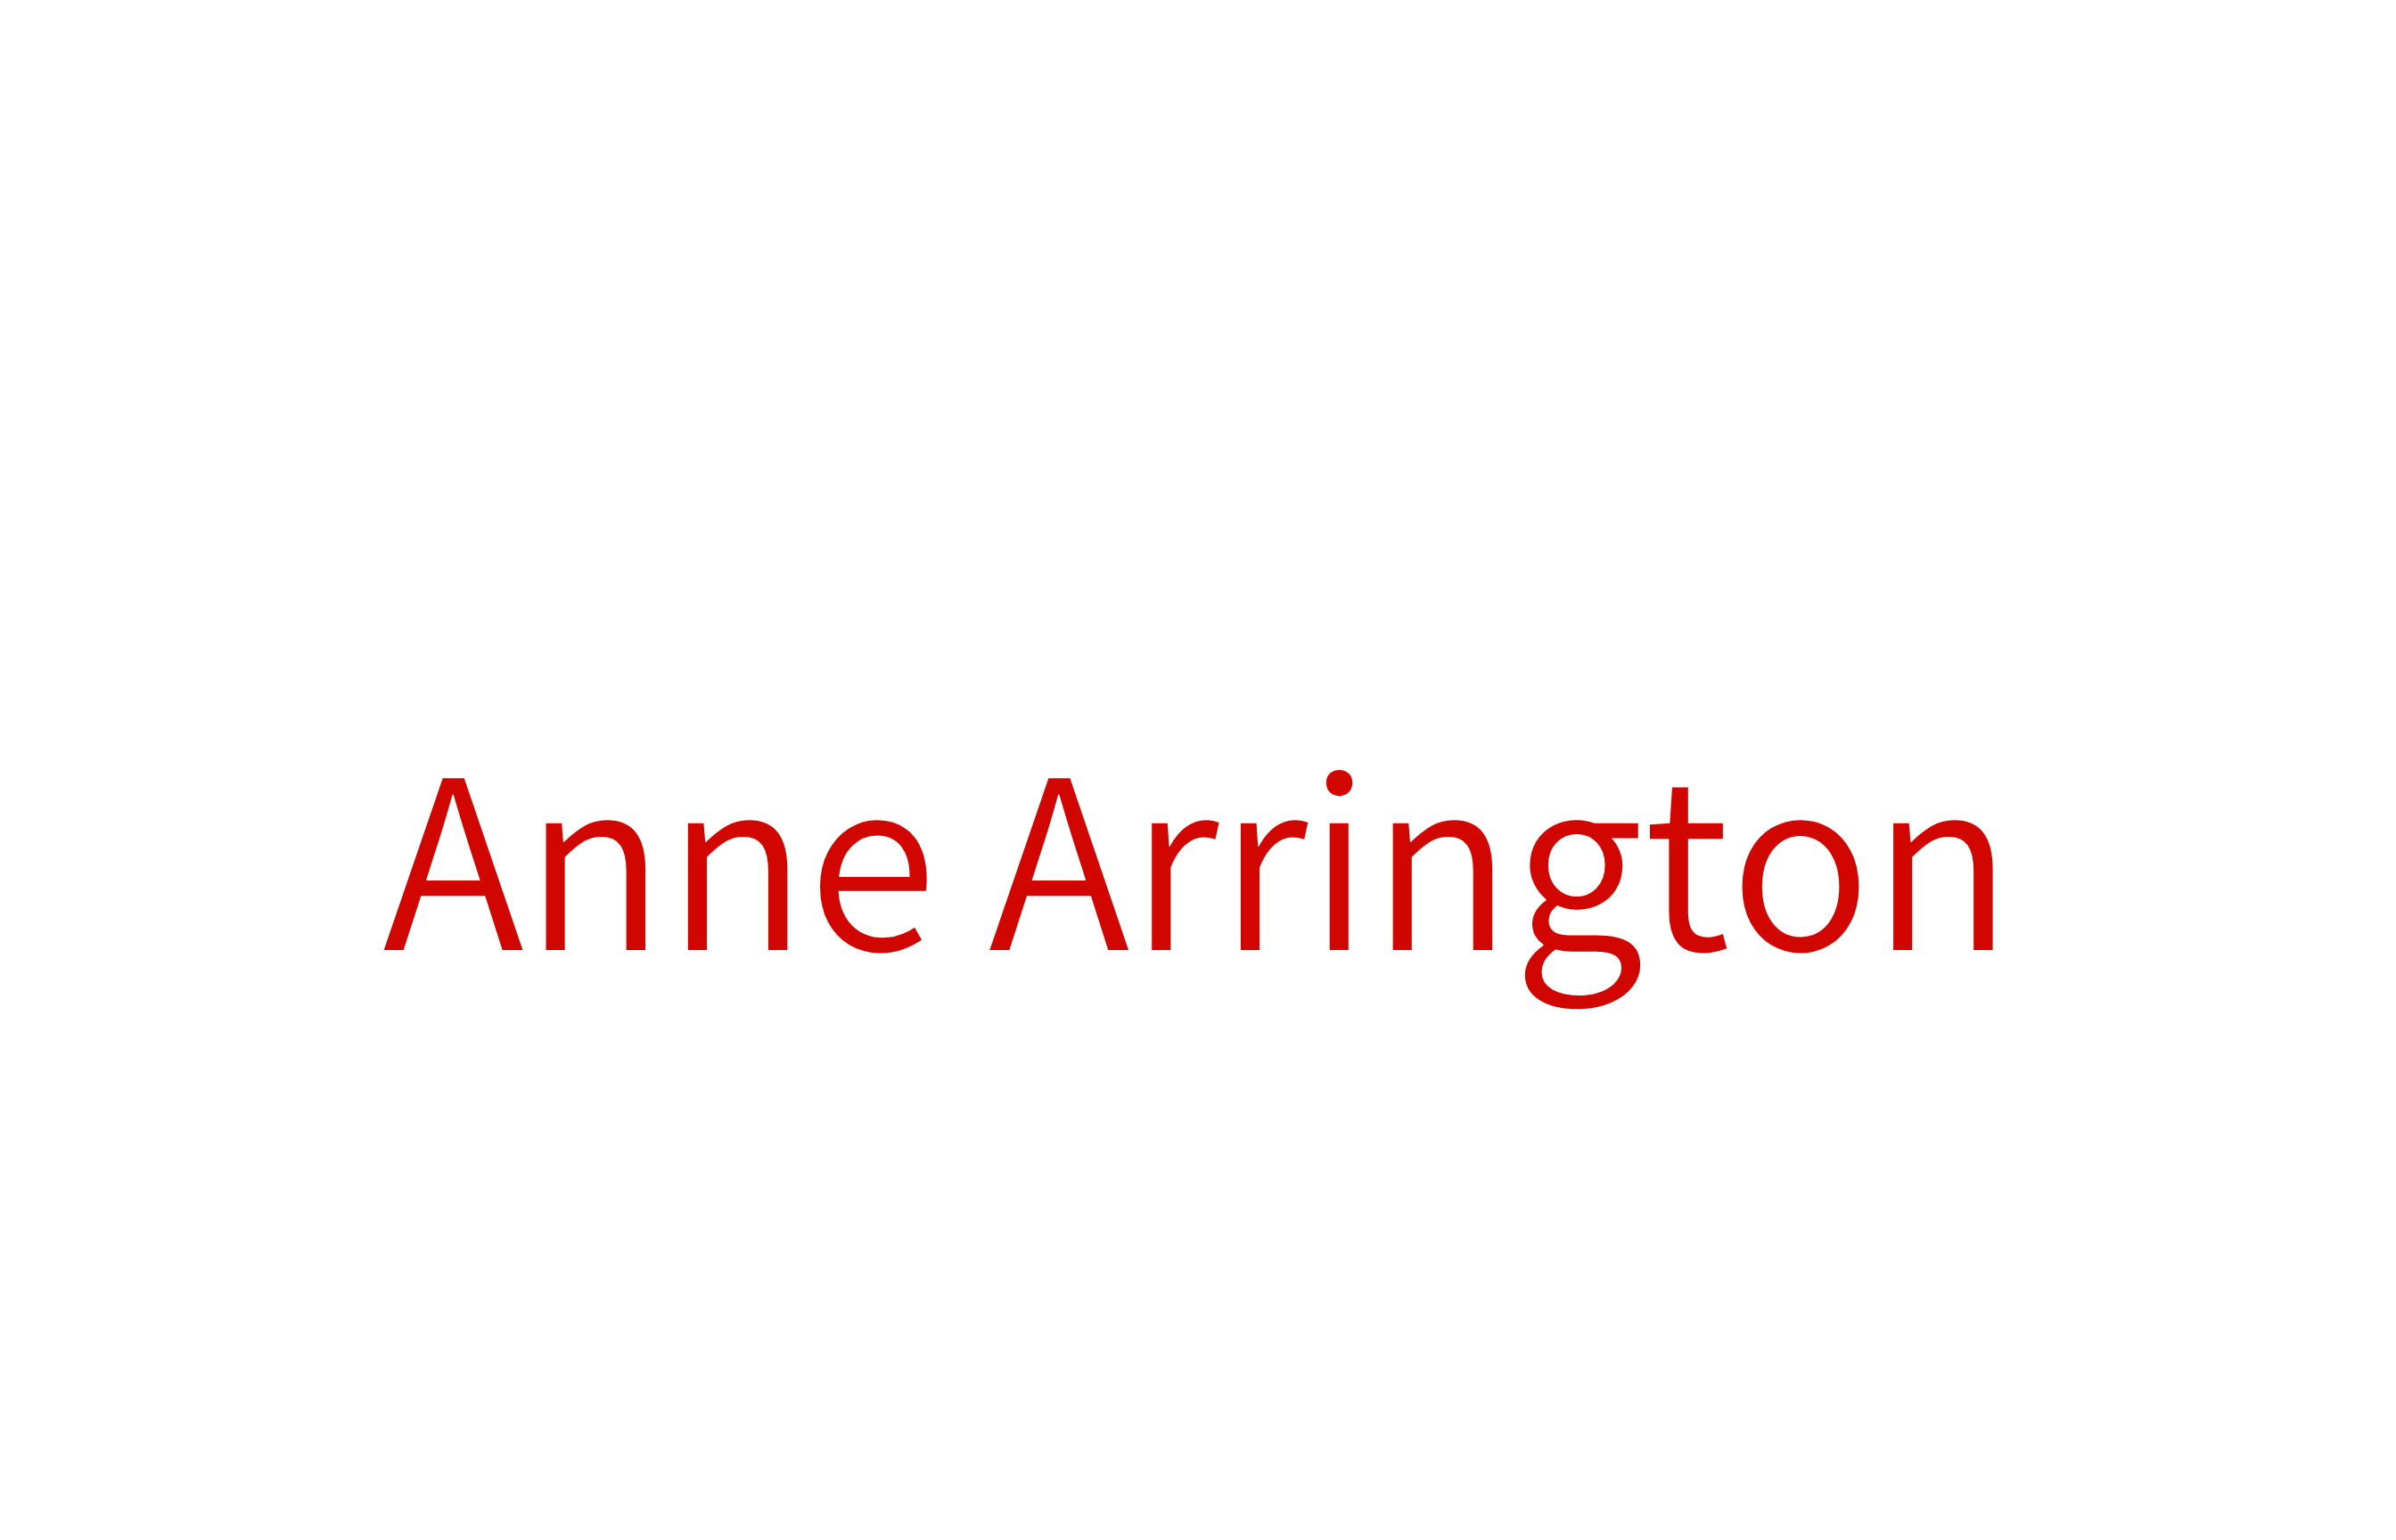 Anne Arrington